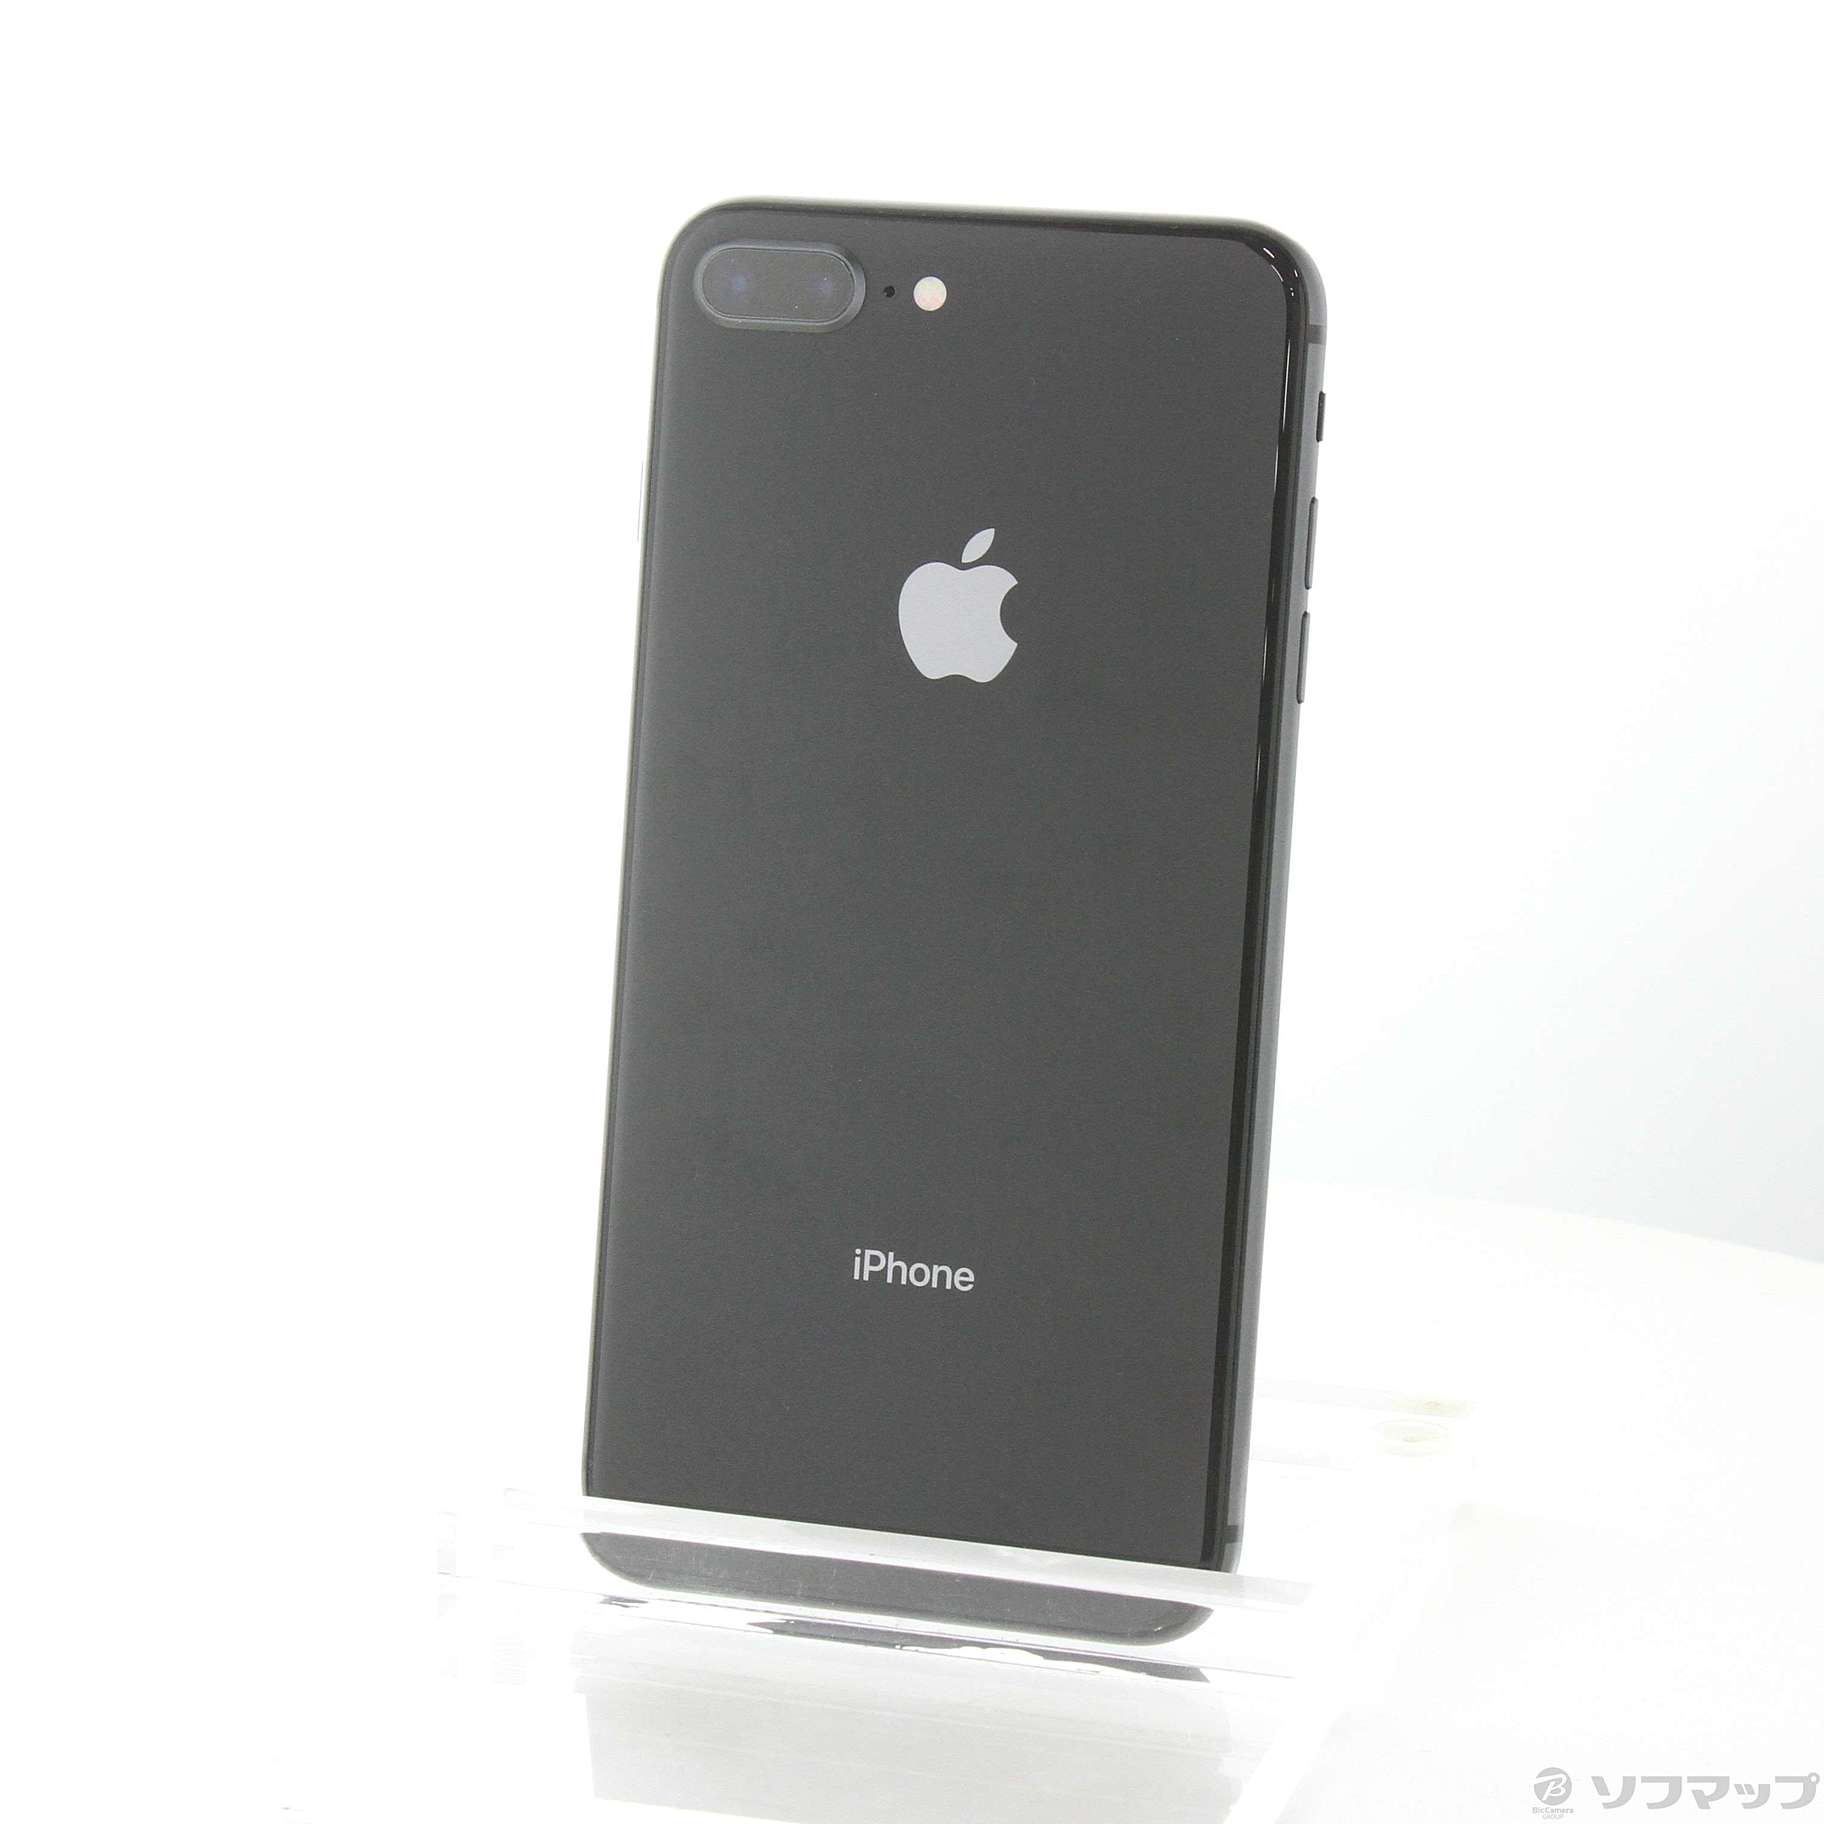 iPhone8plus 256GB space gray